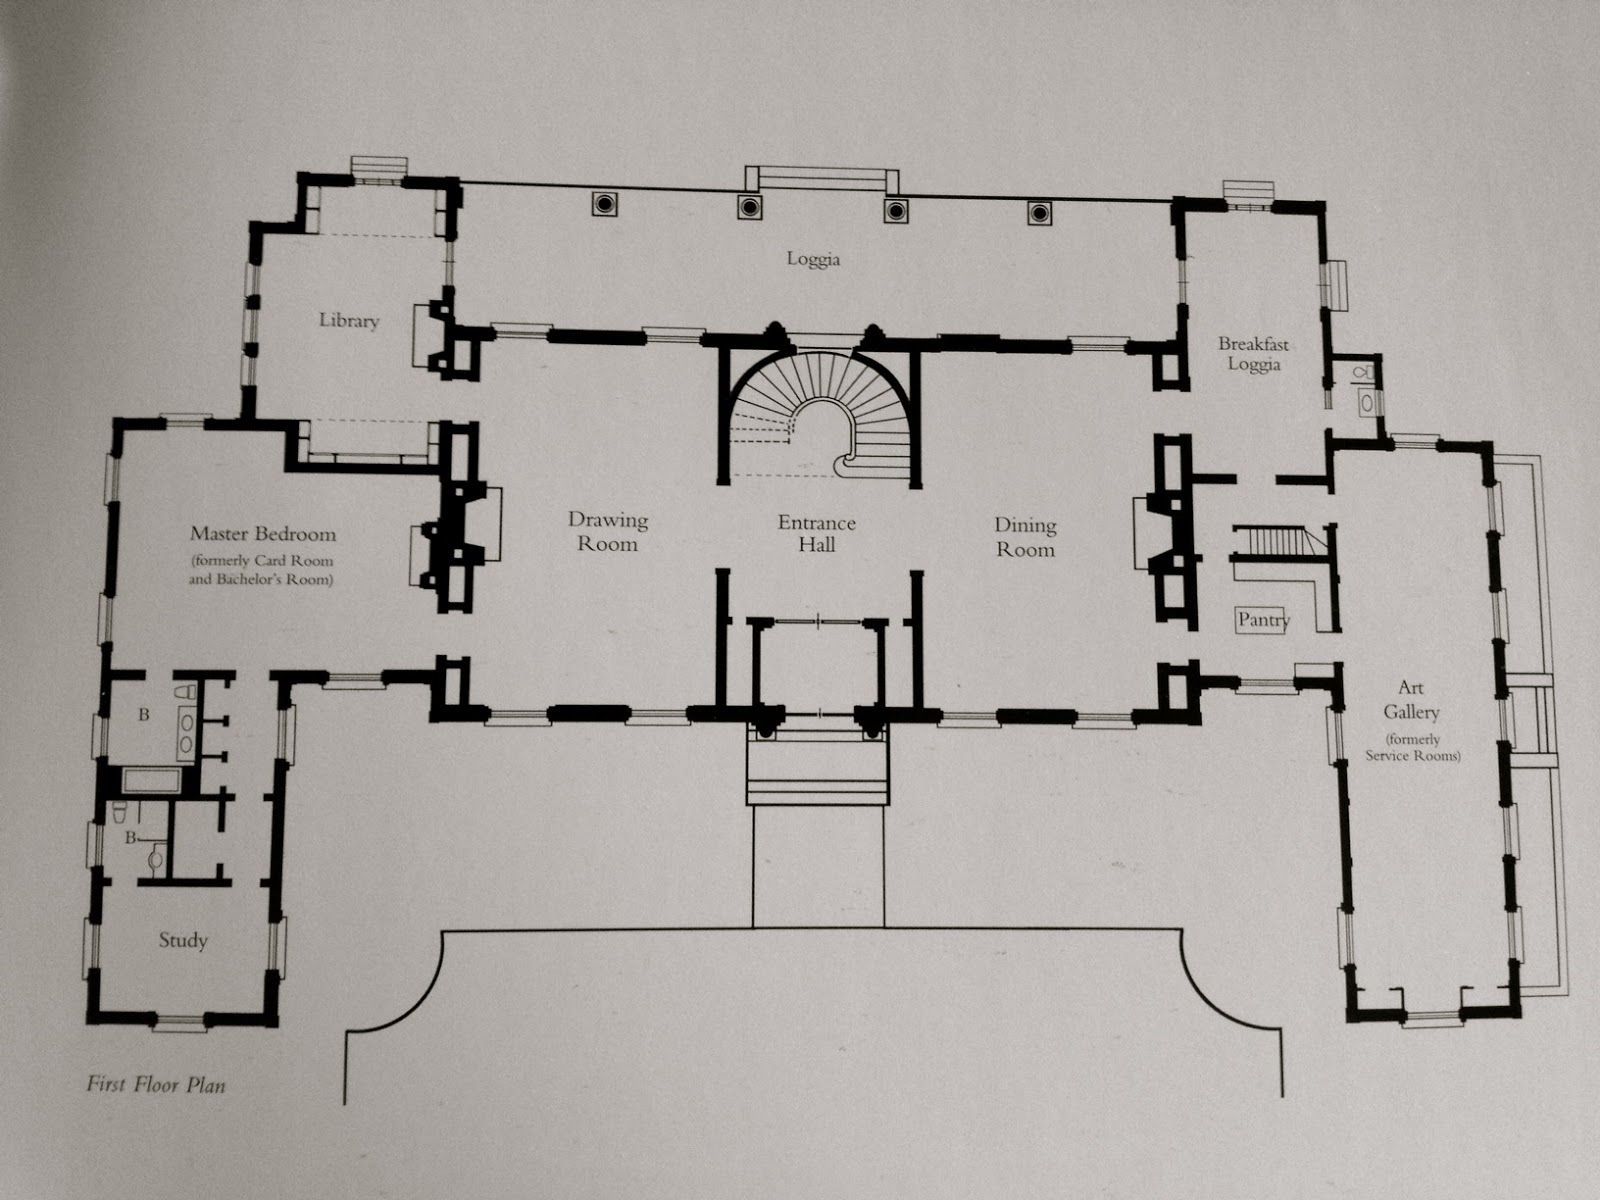 utility room floor plans